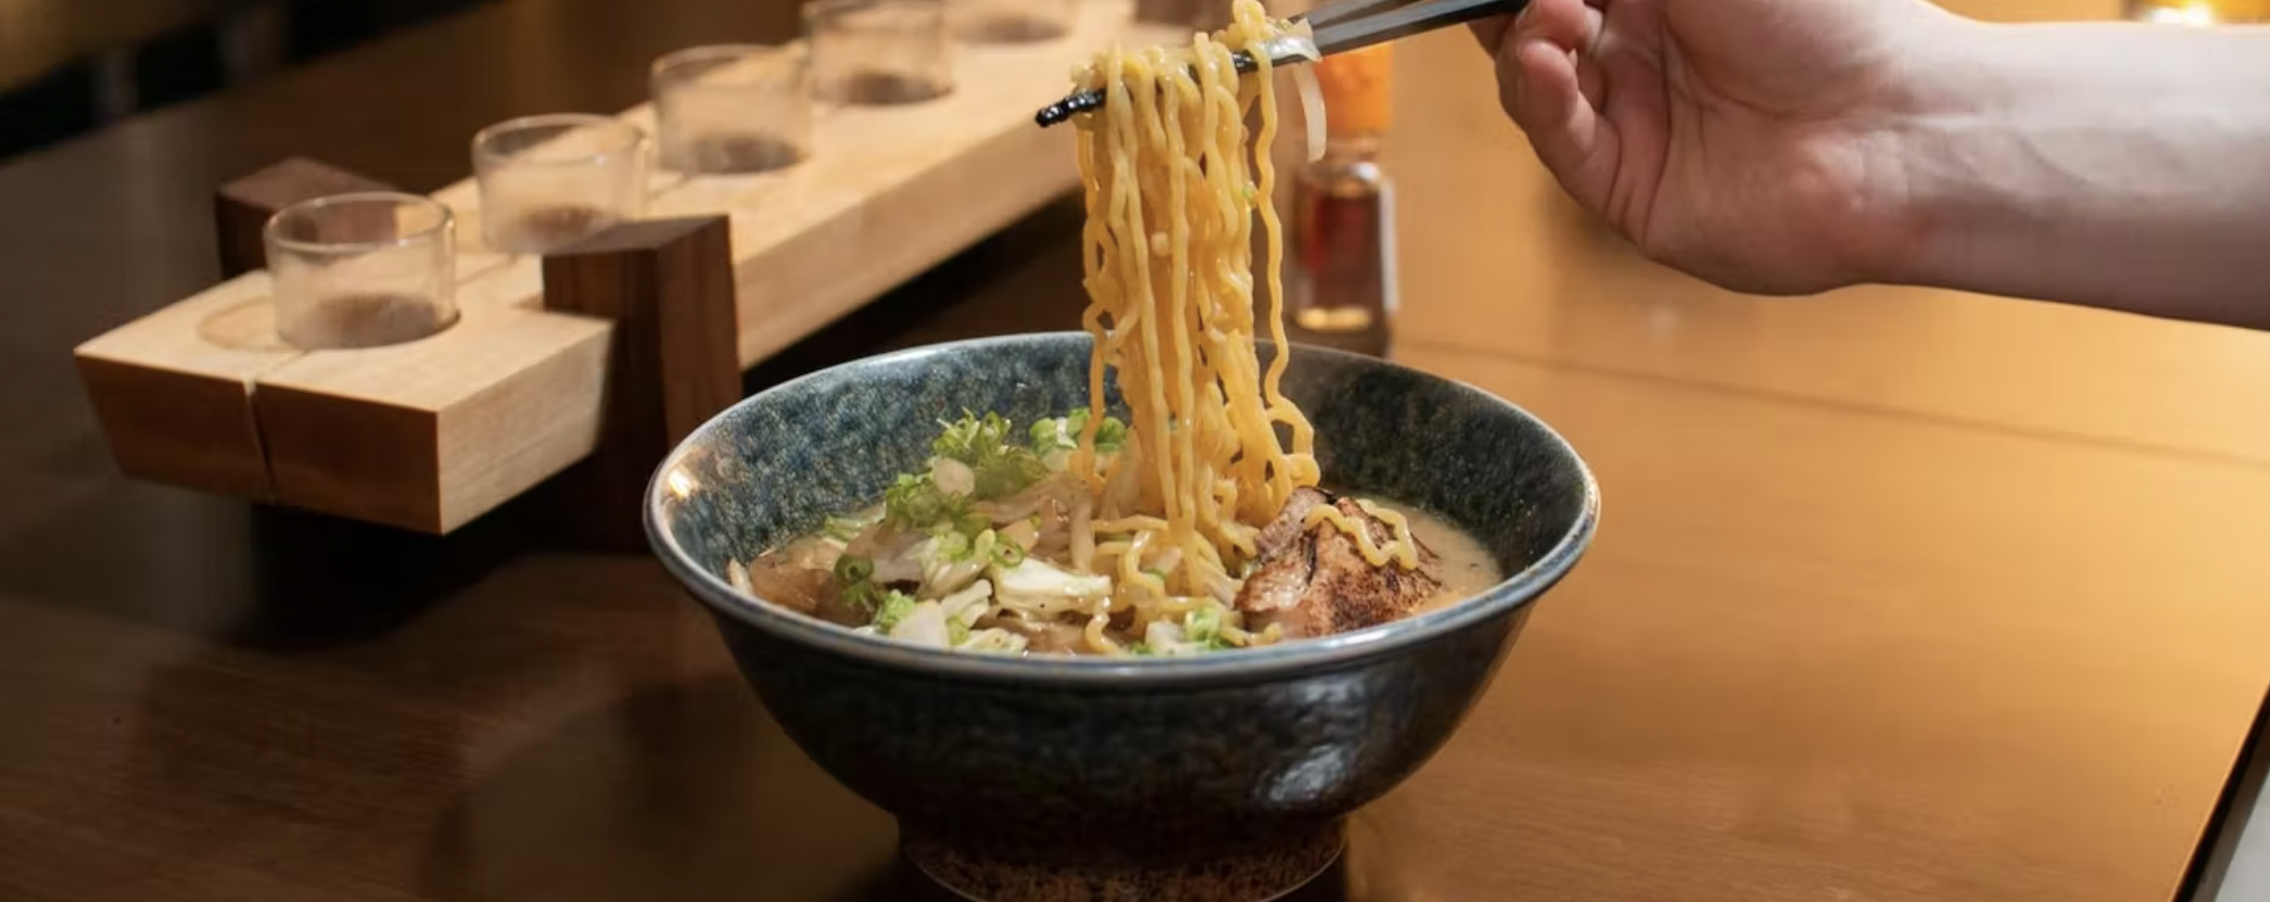 A person uses chopsticks to lift noodles out of a ramen bowl. 